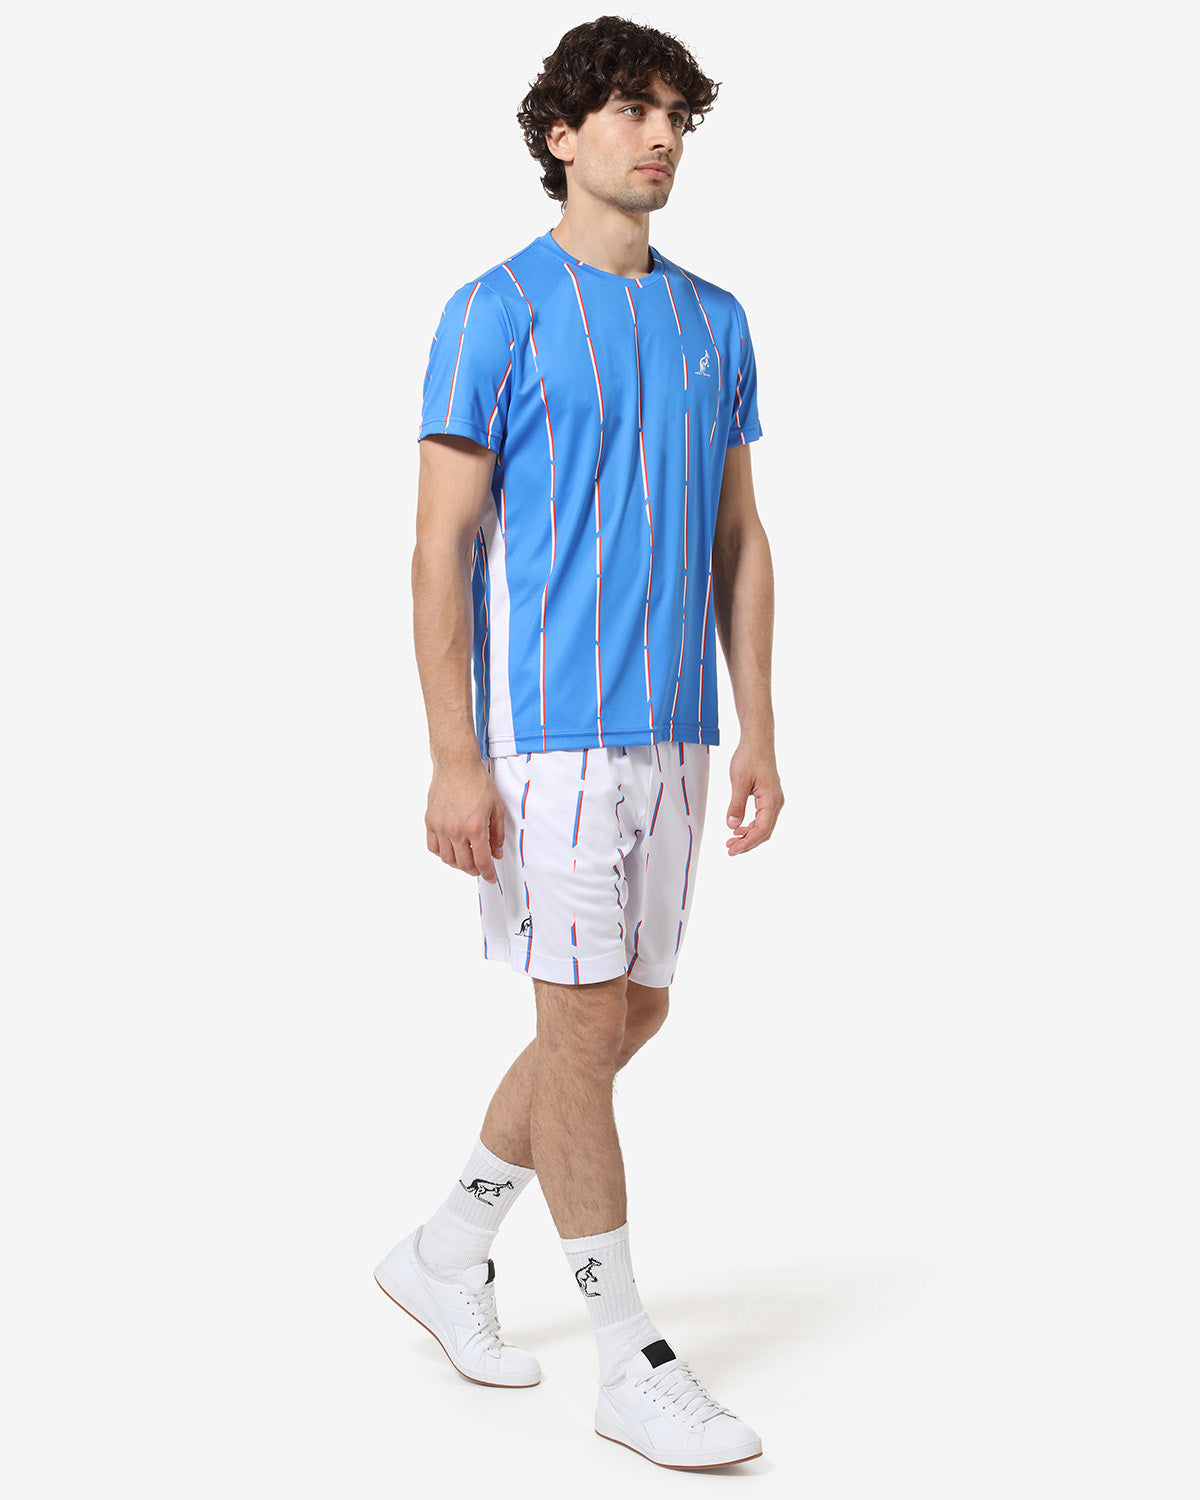 Stripe Short: Australian Tennis